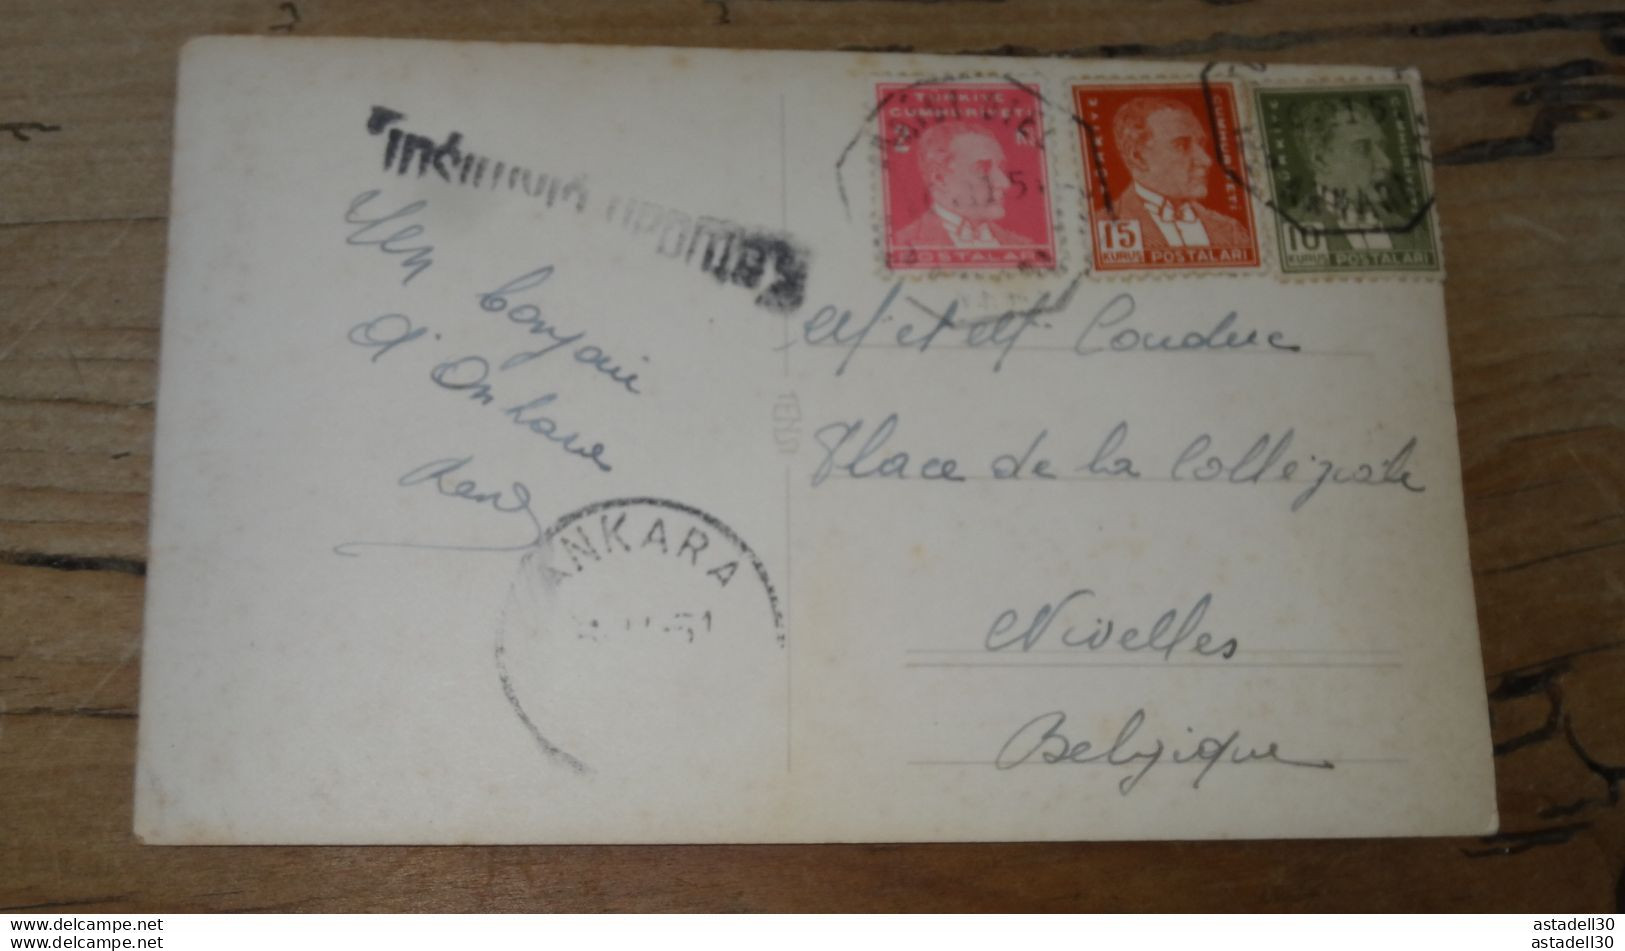 Carte Postale Avec 3 Timbres, TURQUIE, ORTAKOY A ISTANBUL  ............. 8728 - Cartas & Documentos